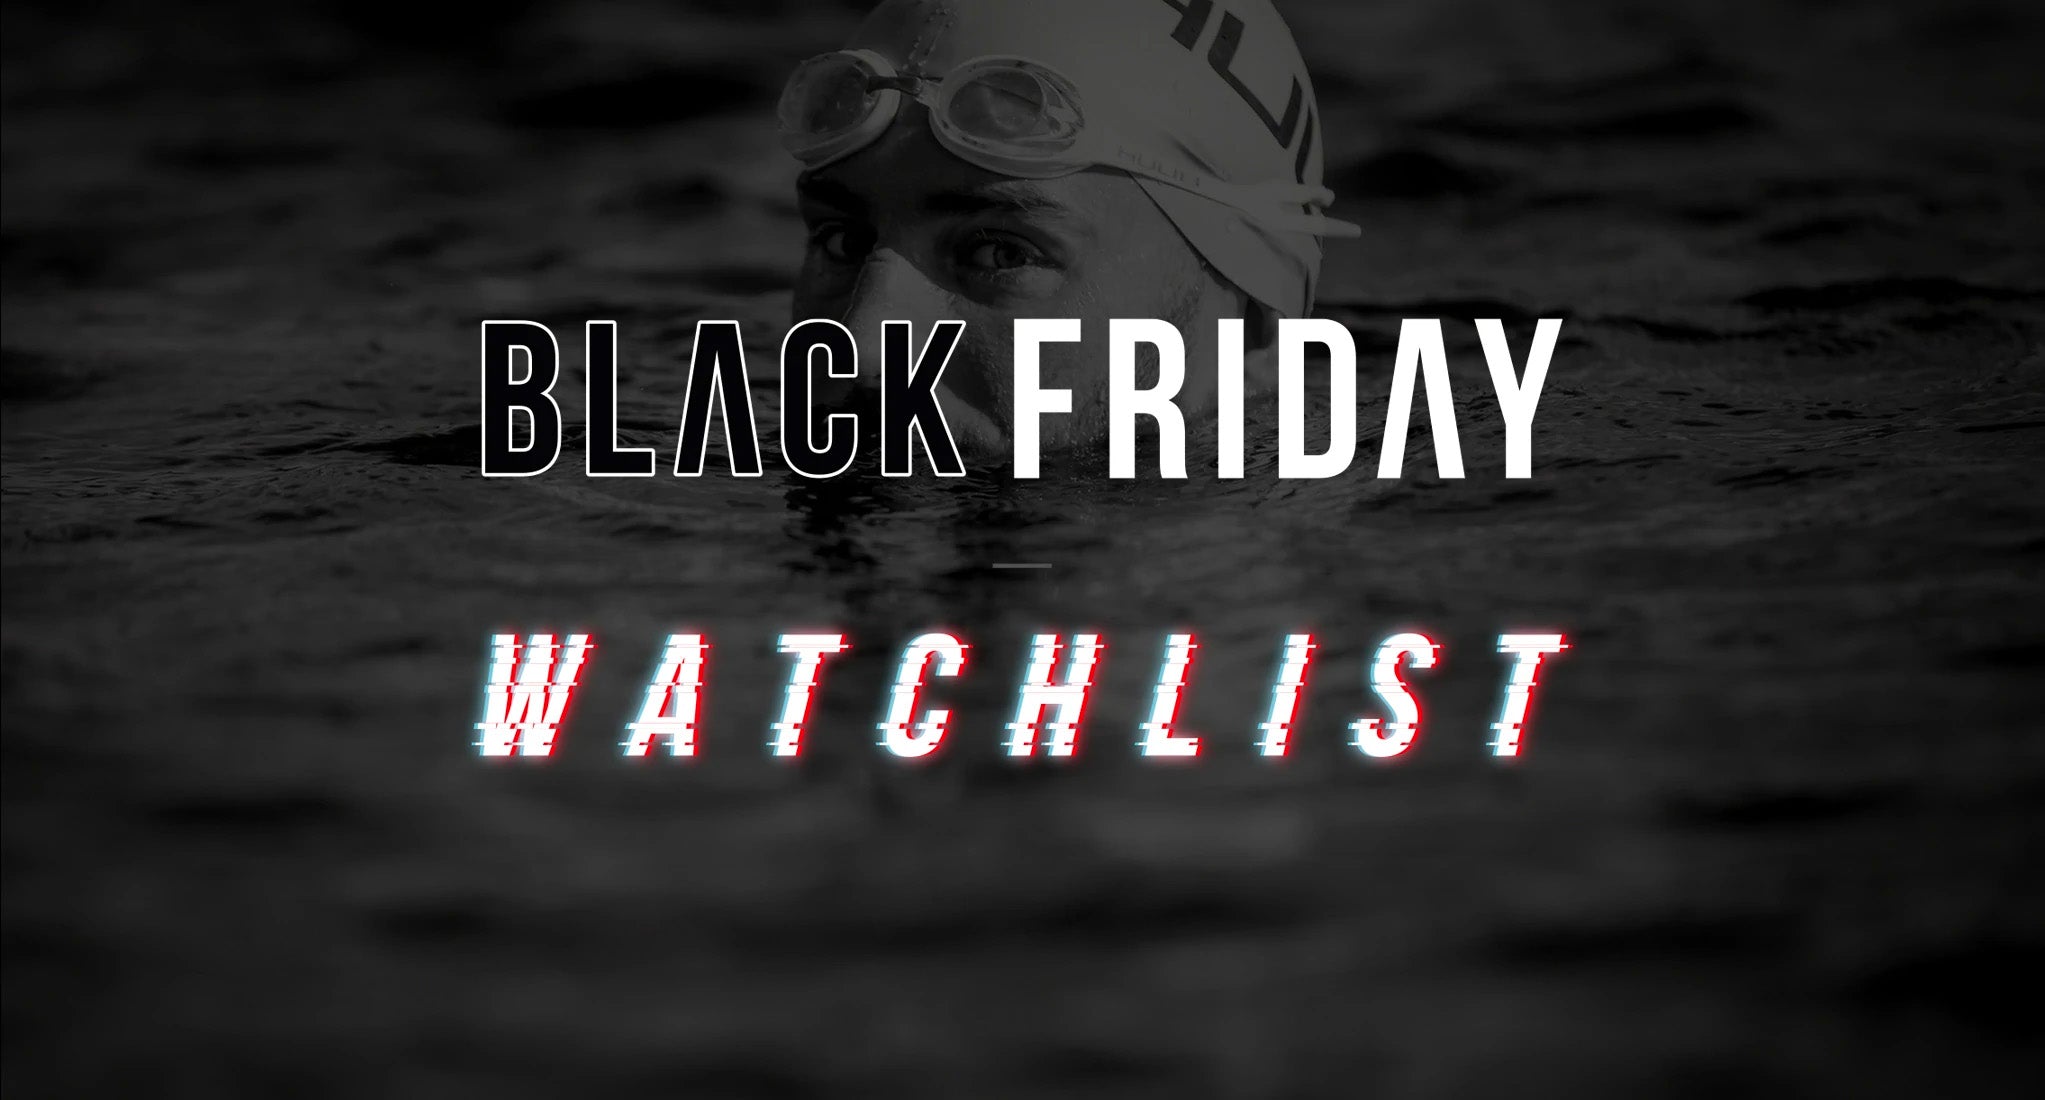 Black Friday 2020: Watchlist